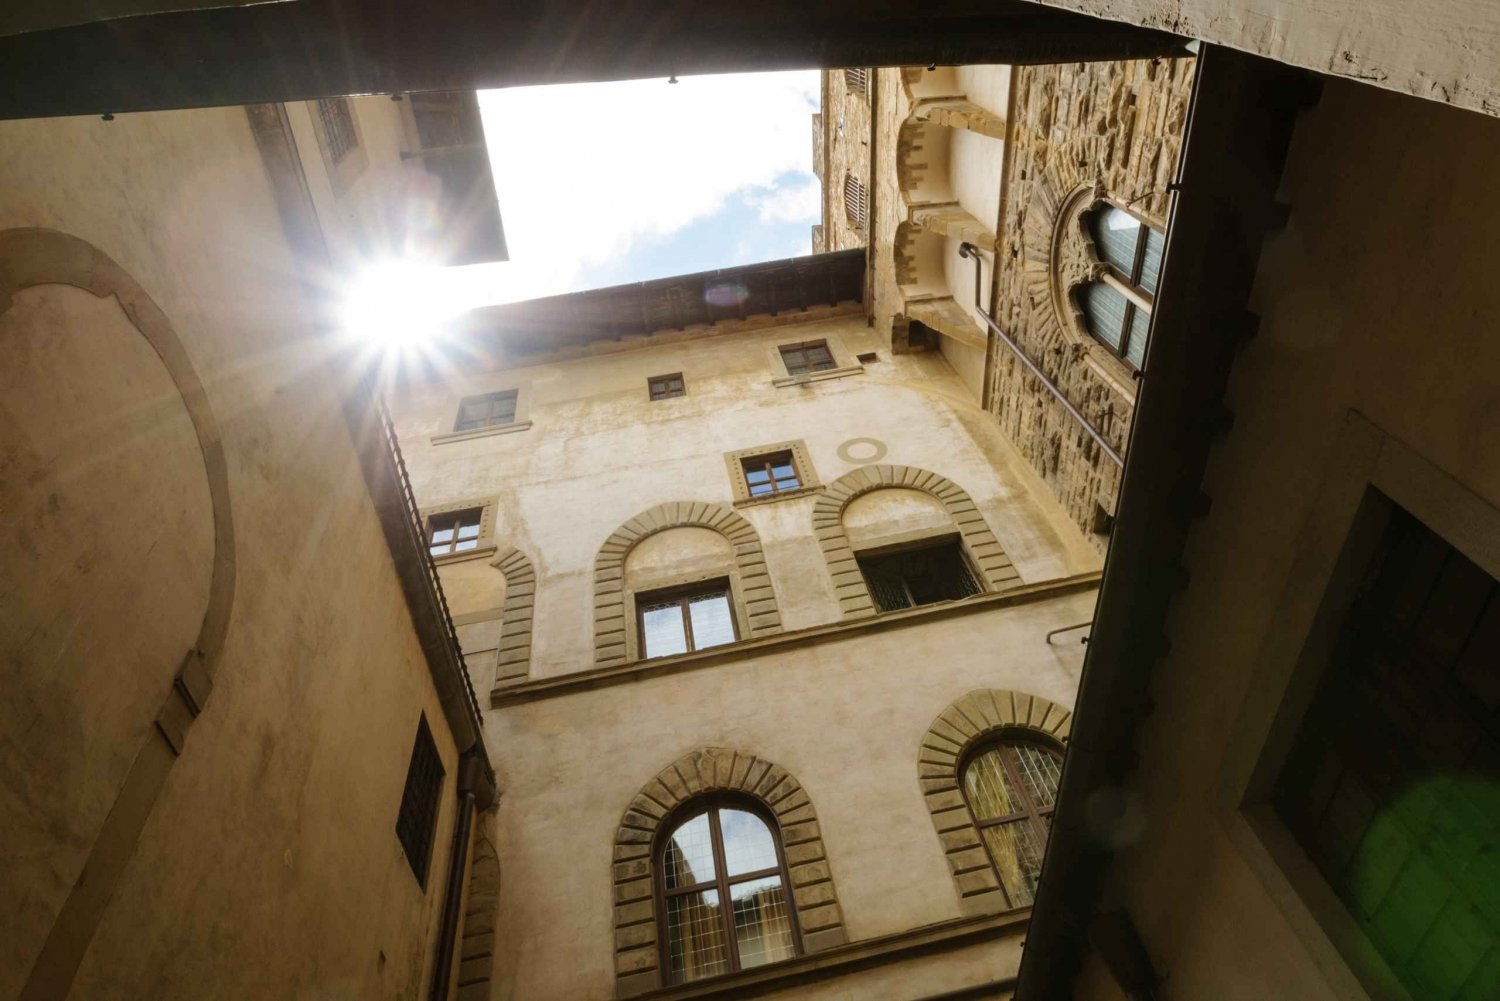 Florence: Palazzo Vecchio Entrance Ticket & Audioguide